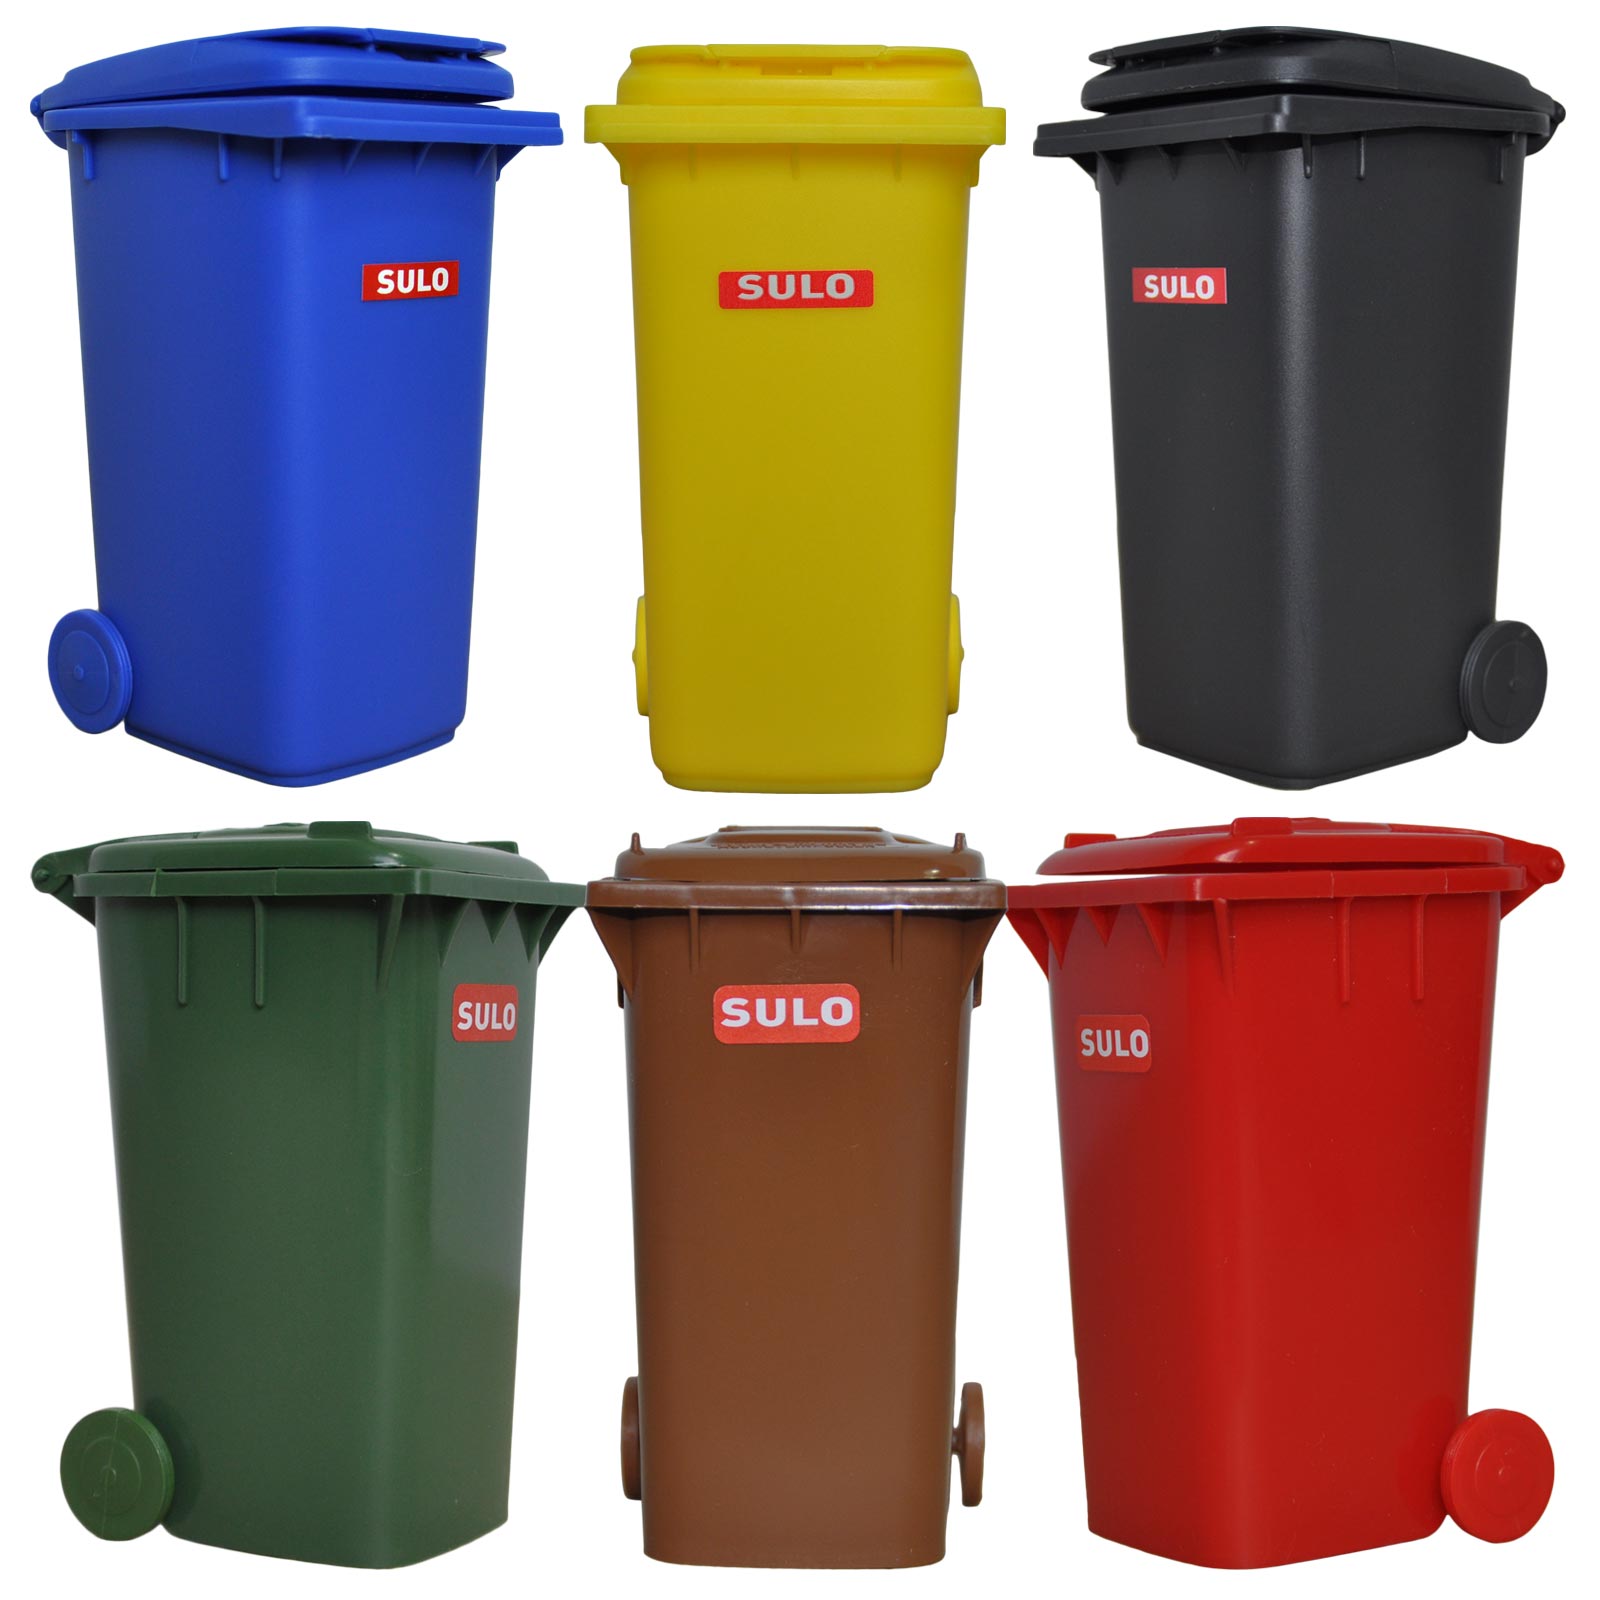 1x Mini-Müllbehälter grün Sulo Mülltonne 240  Liter  1:1 Abbild Spielzeug Kinder 